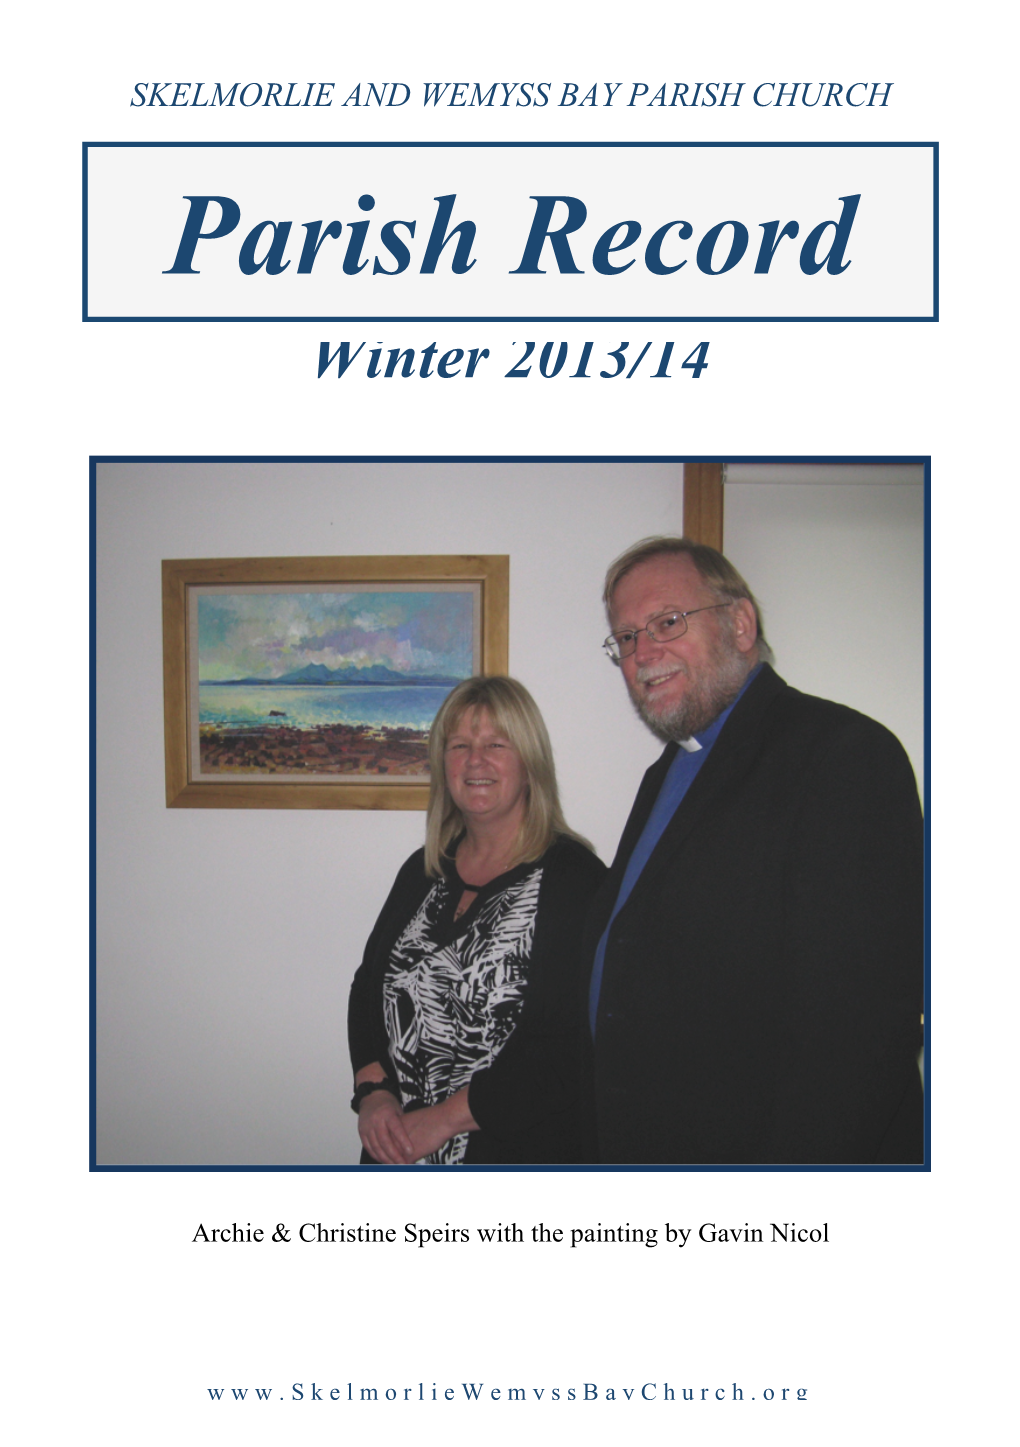 Parish Record Winter 2013/14